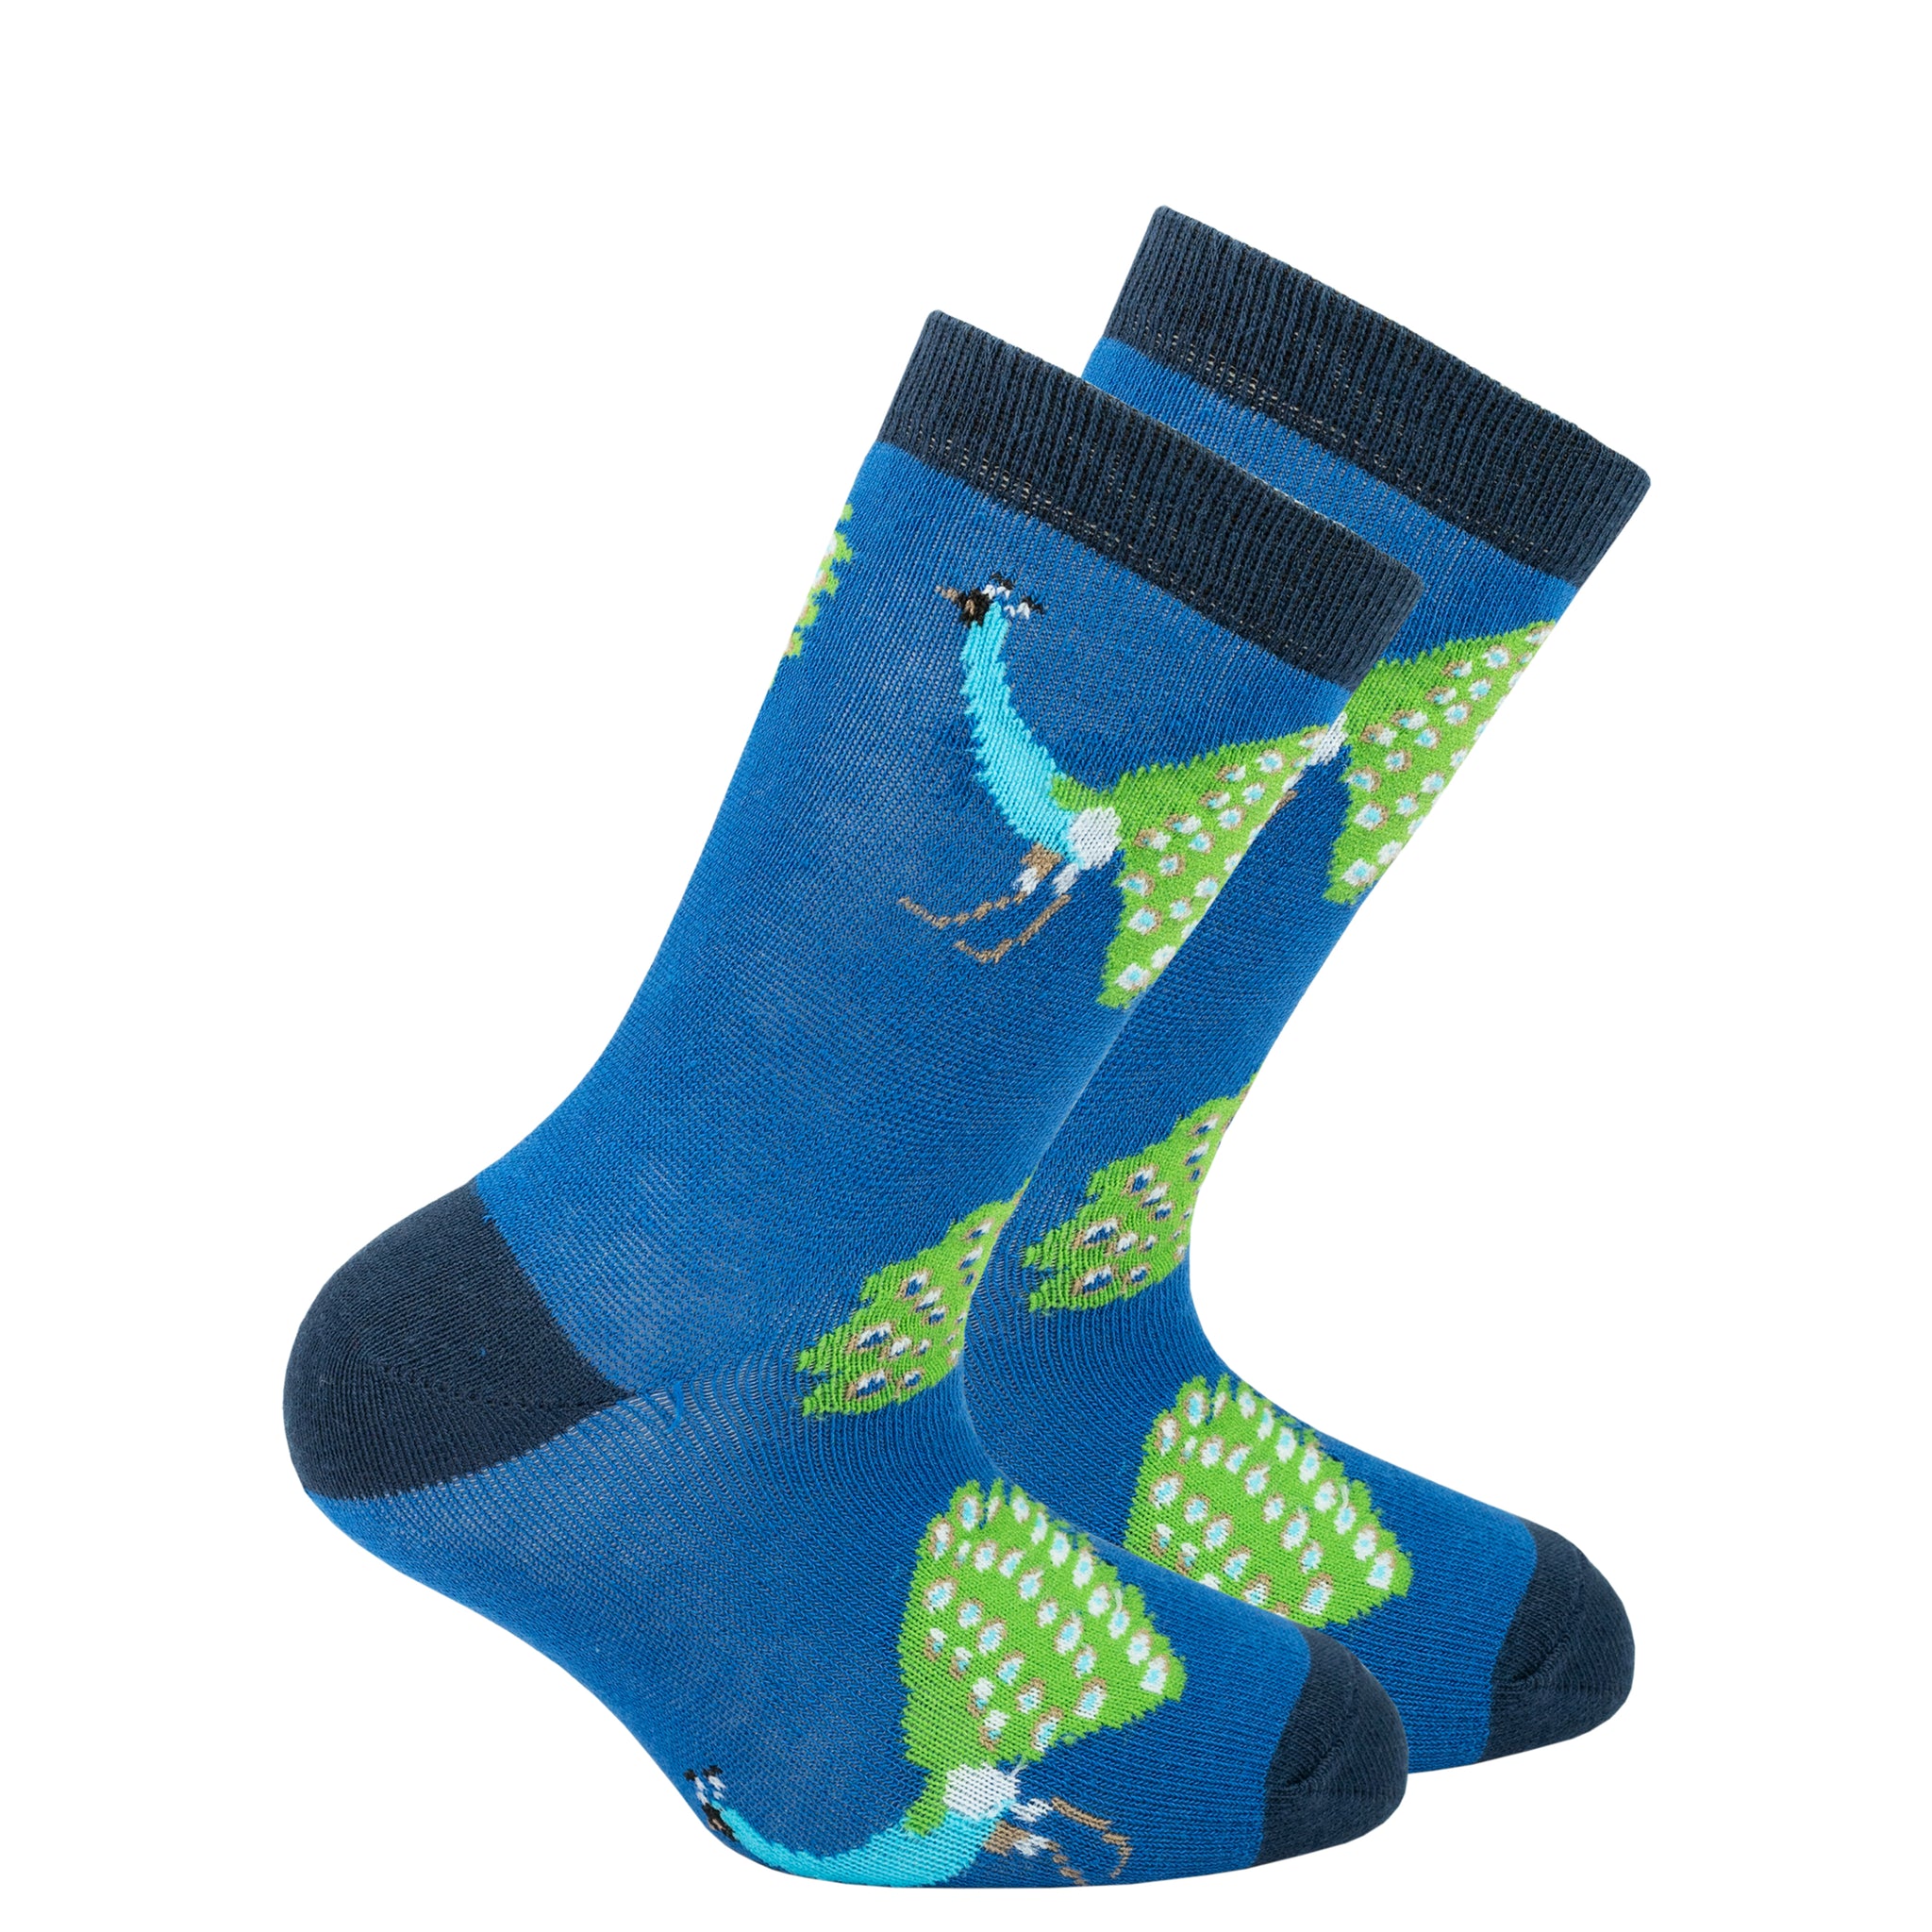 Kids Peacock Socks blue and green